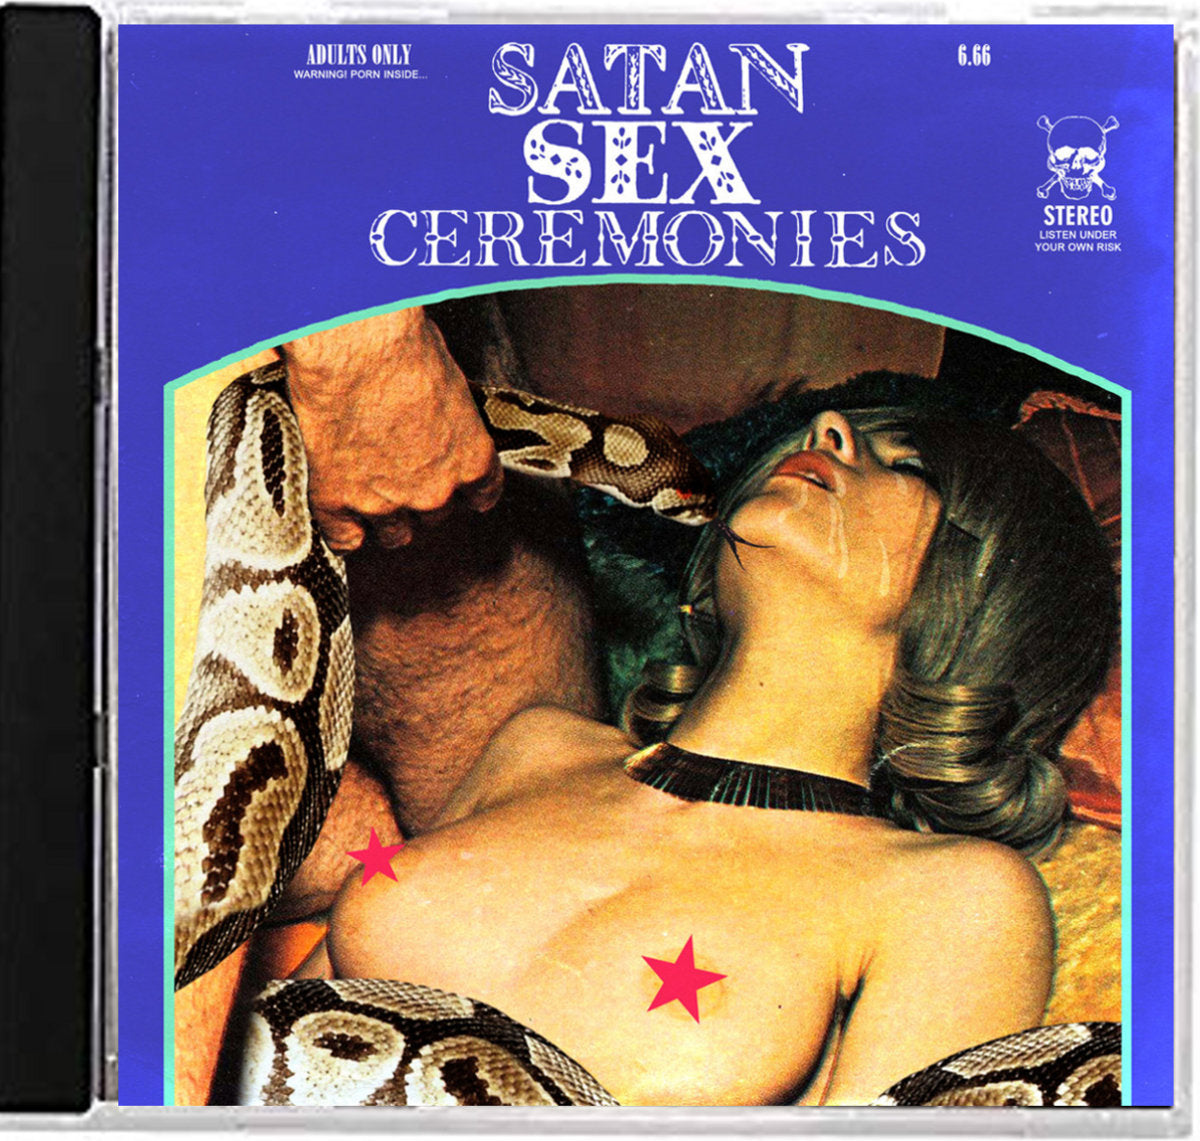 MEPHISTOFELES - "SATAN SEX CEREMONIES" Compact Disc